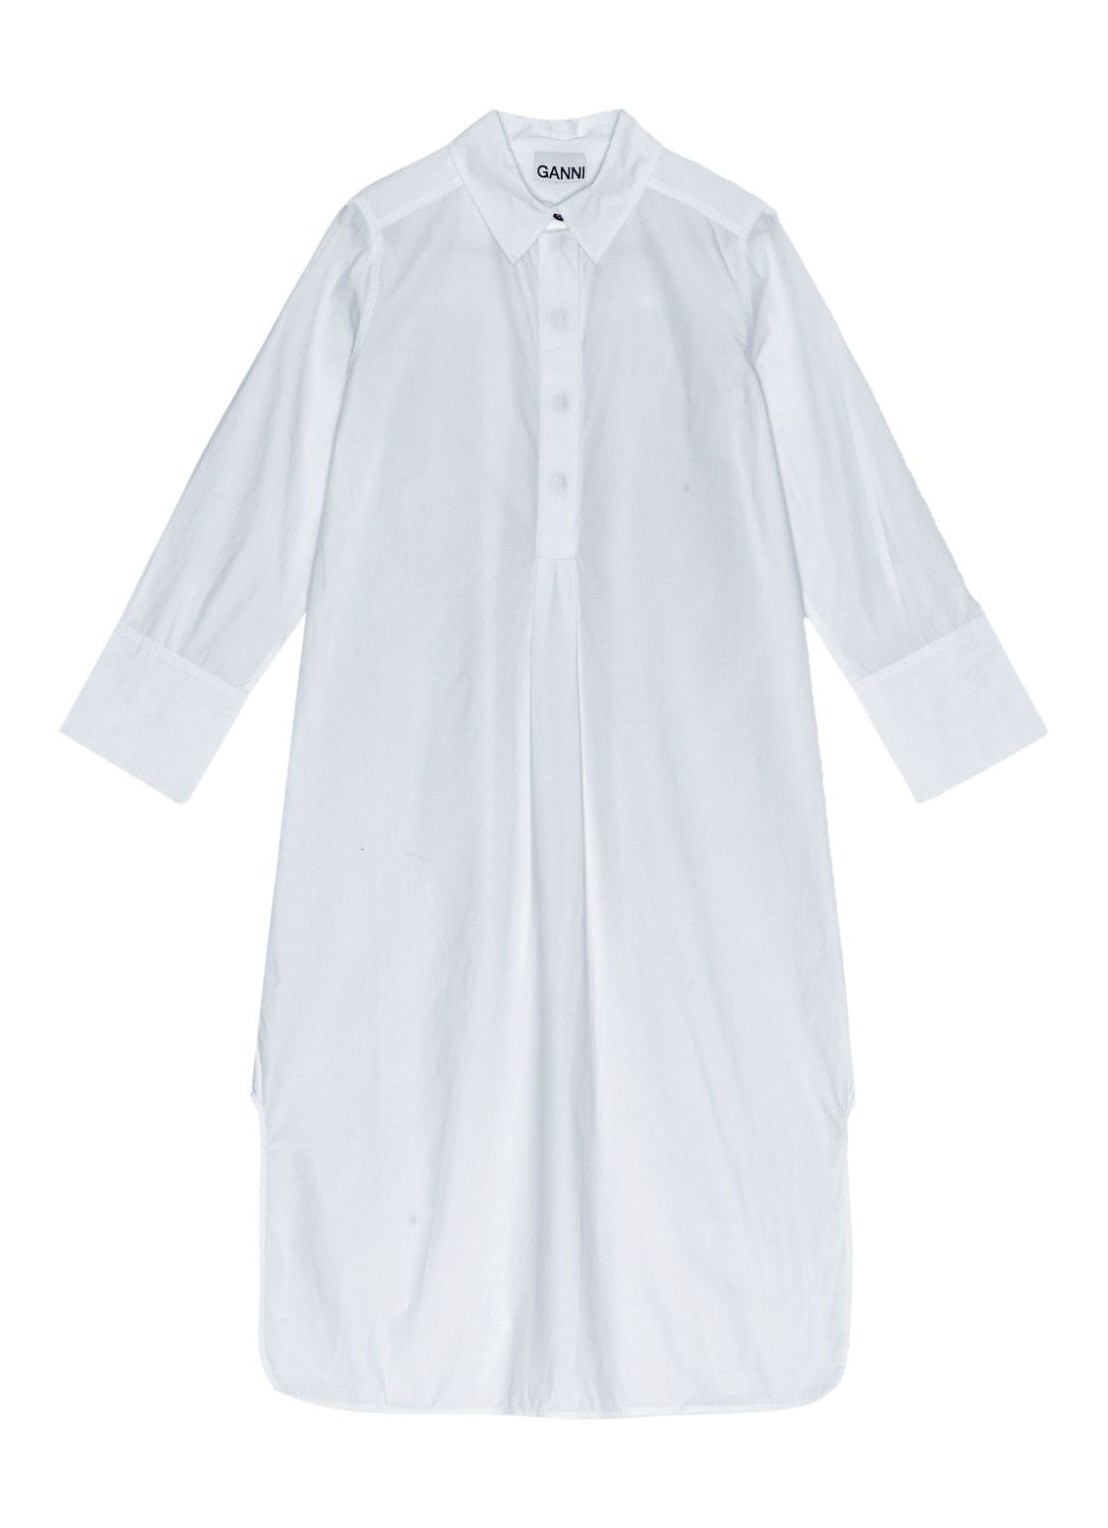 Vestido ganni dress woman cotton poplin oversized shirt dress f8999 151 talla blanco
 